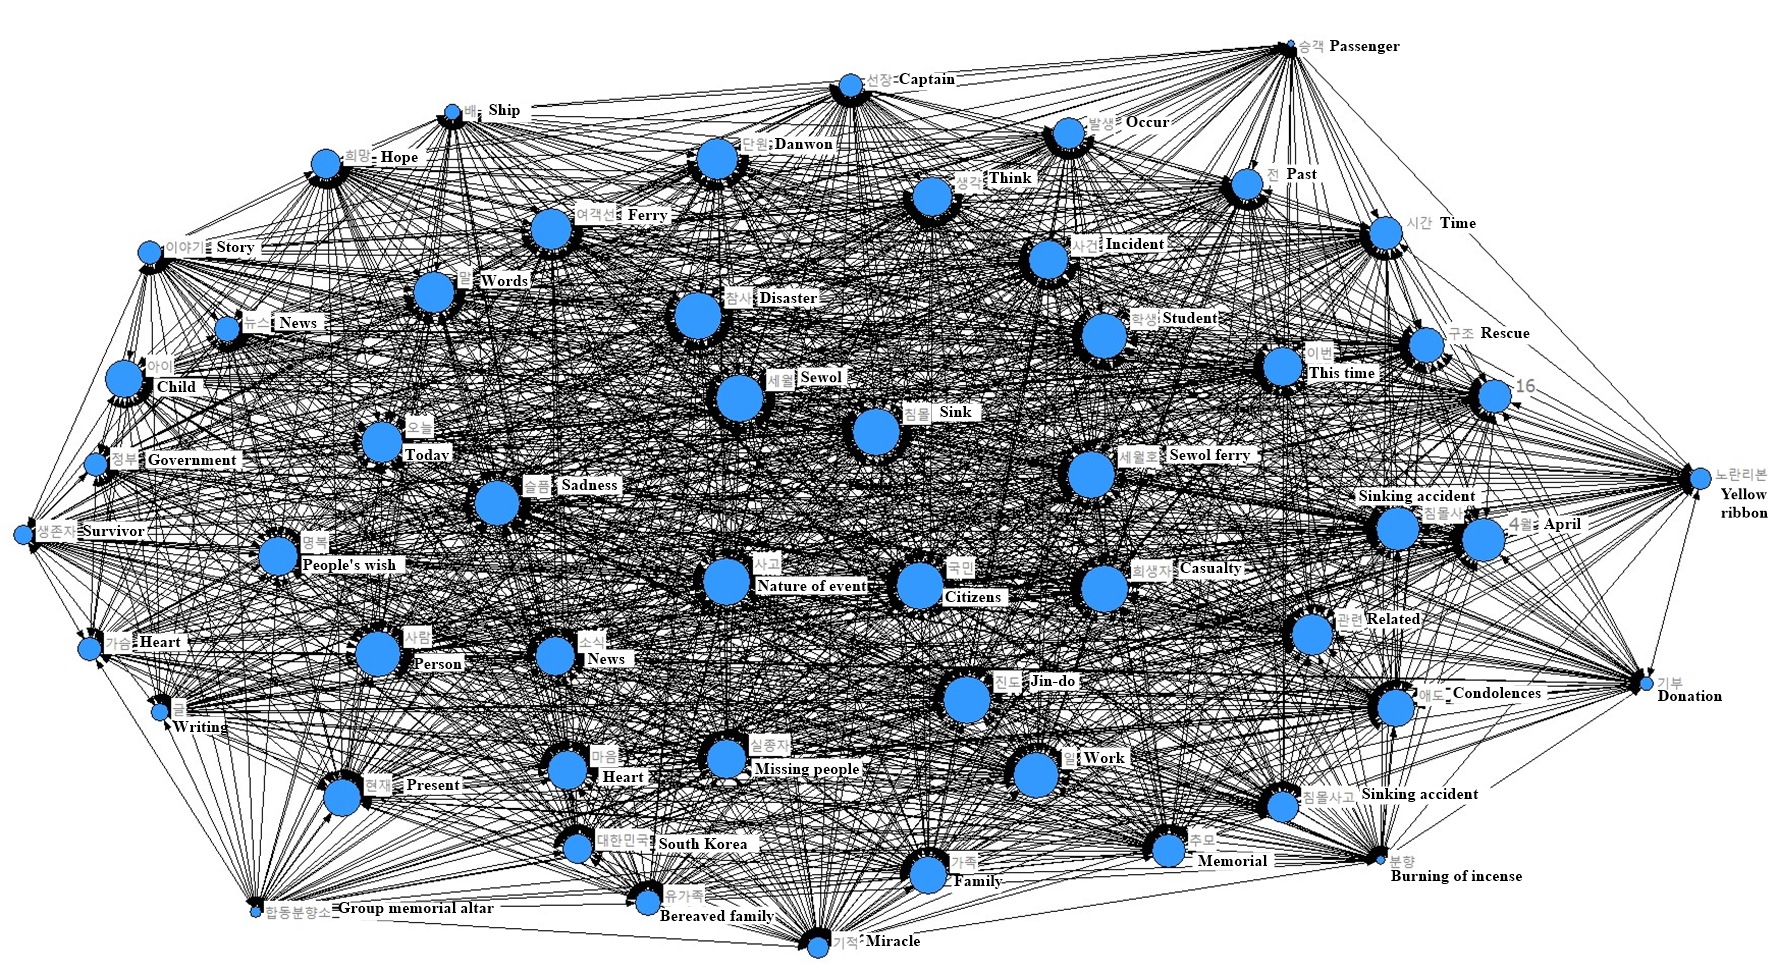 Figure 1: Semantic Network Analysis